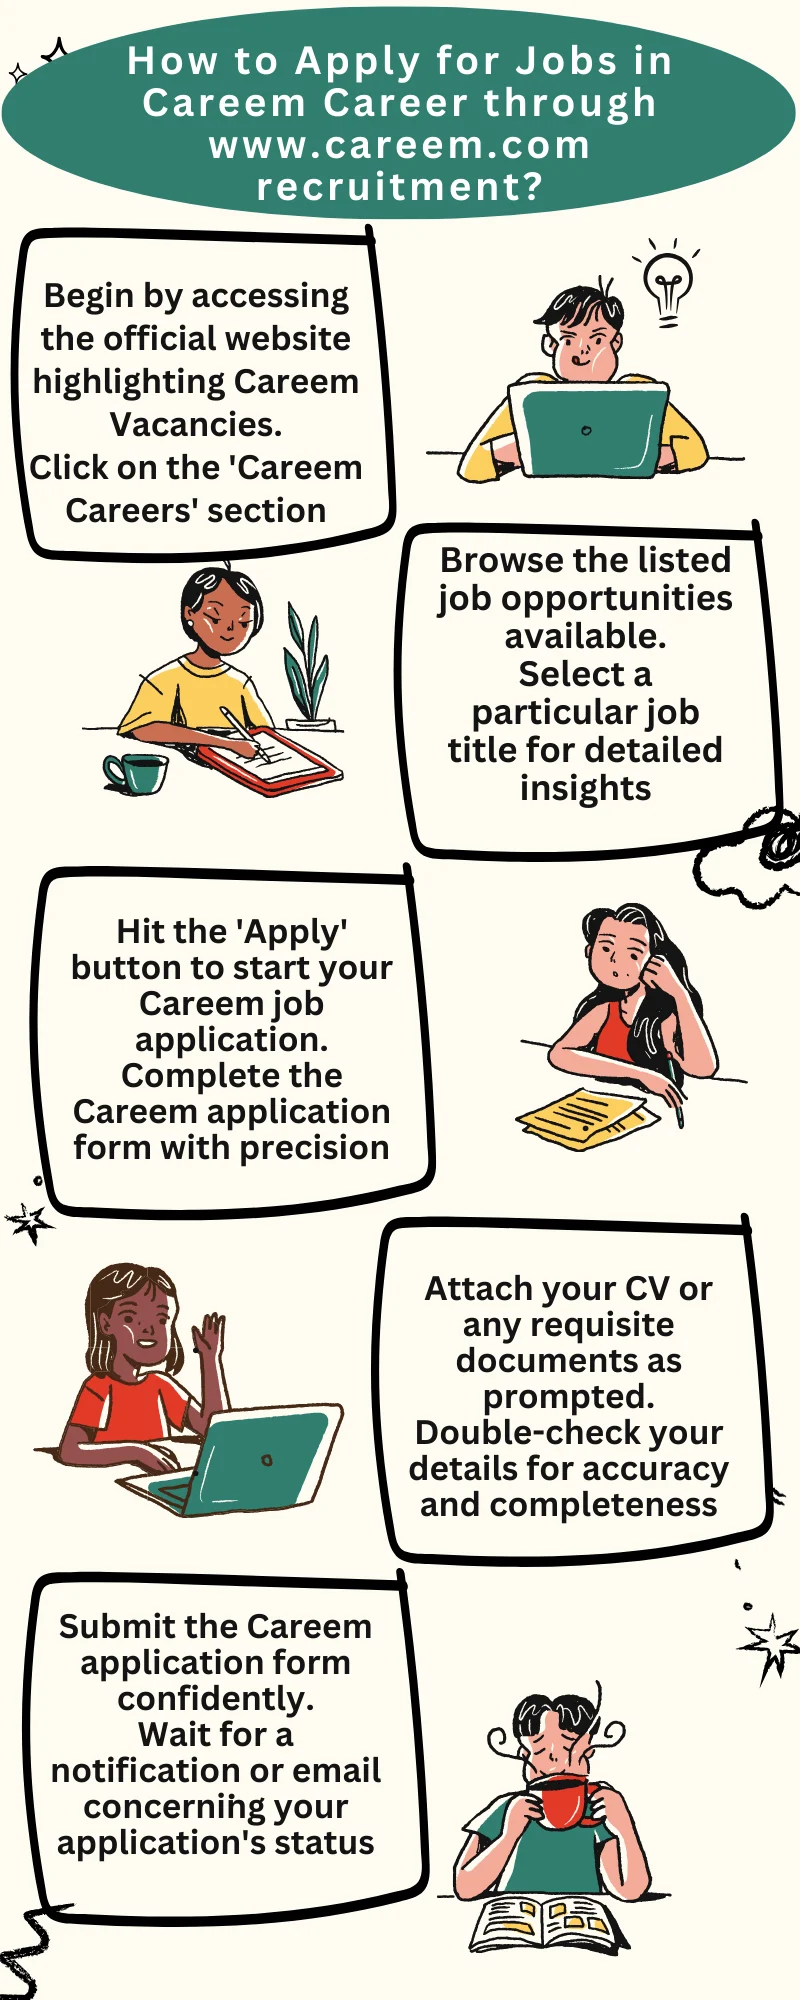 How to Apply for Jobs in Careem Career through www.careem.com recruitment?